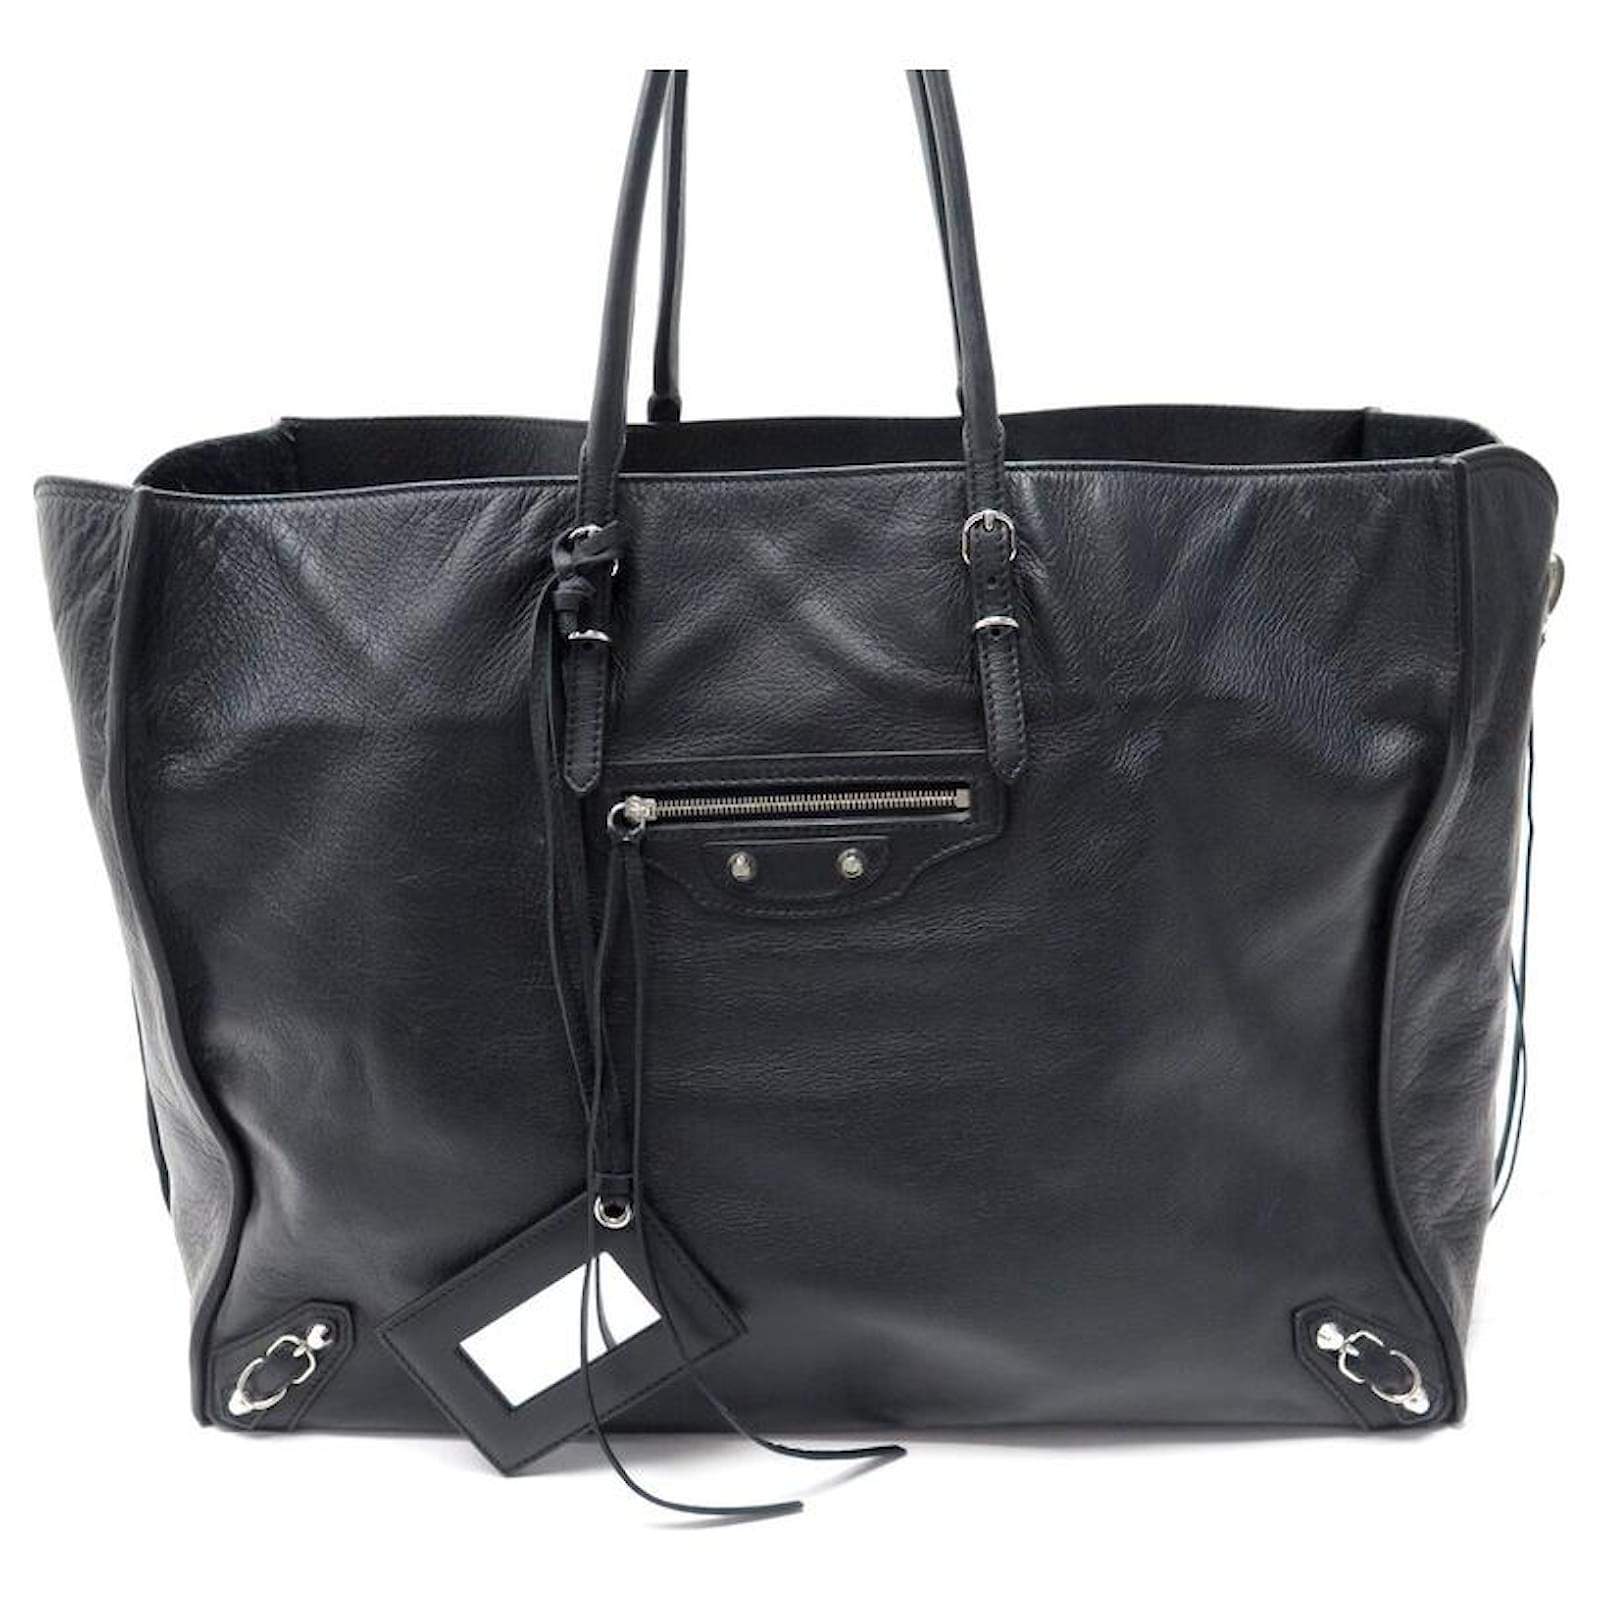 Lauren Conrad Stays True to Her Style with a Neutral Balenciaga Bag -  PurseBlog